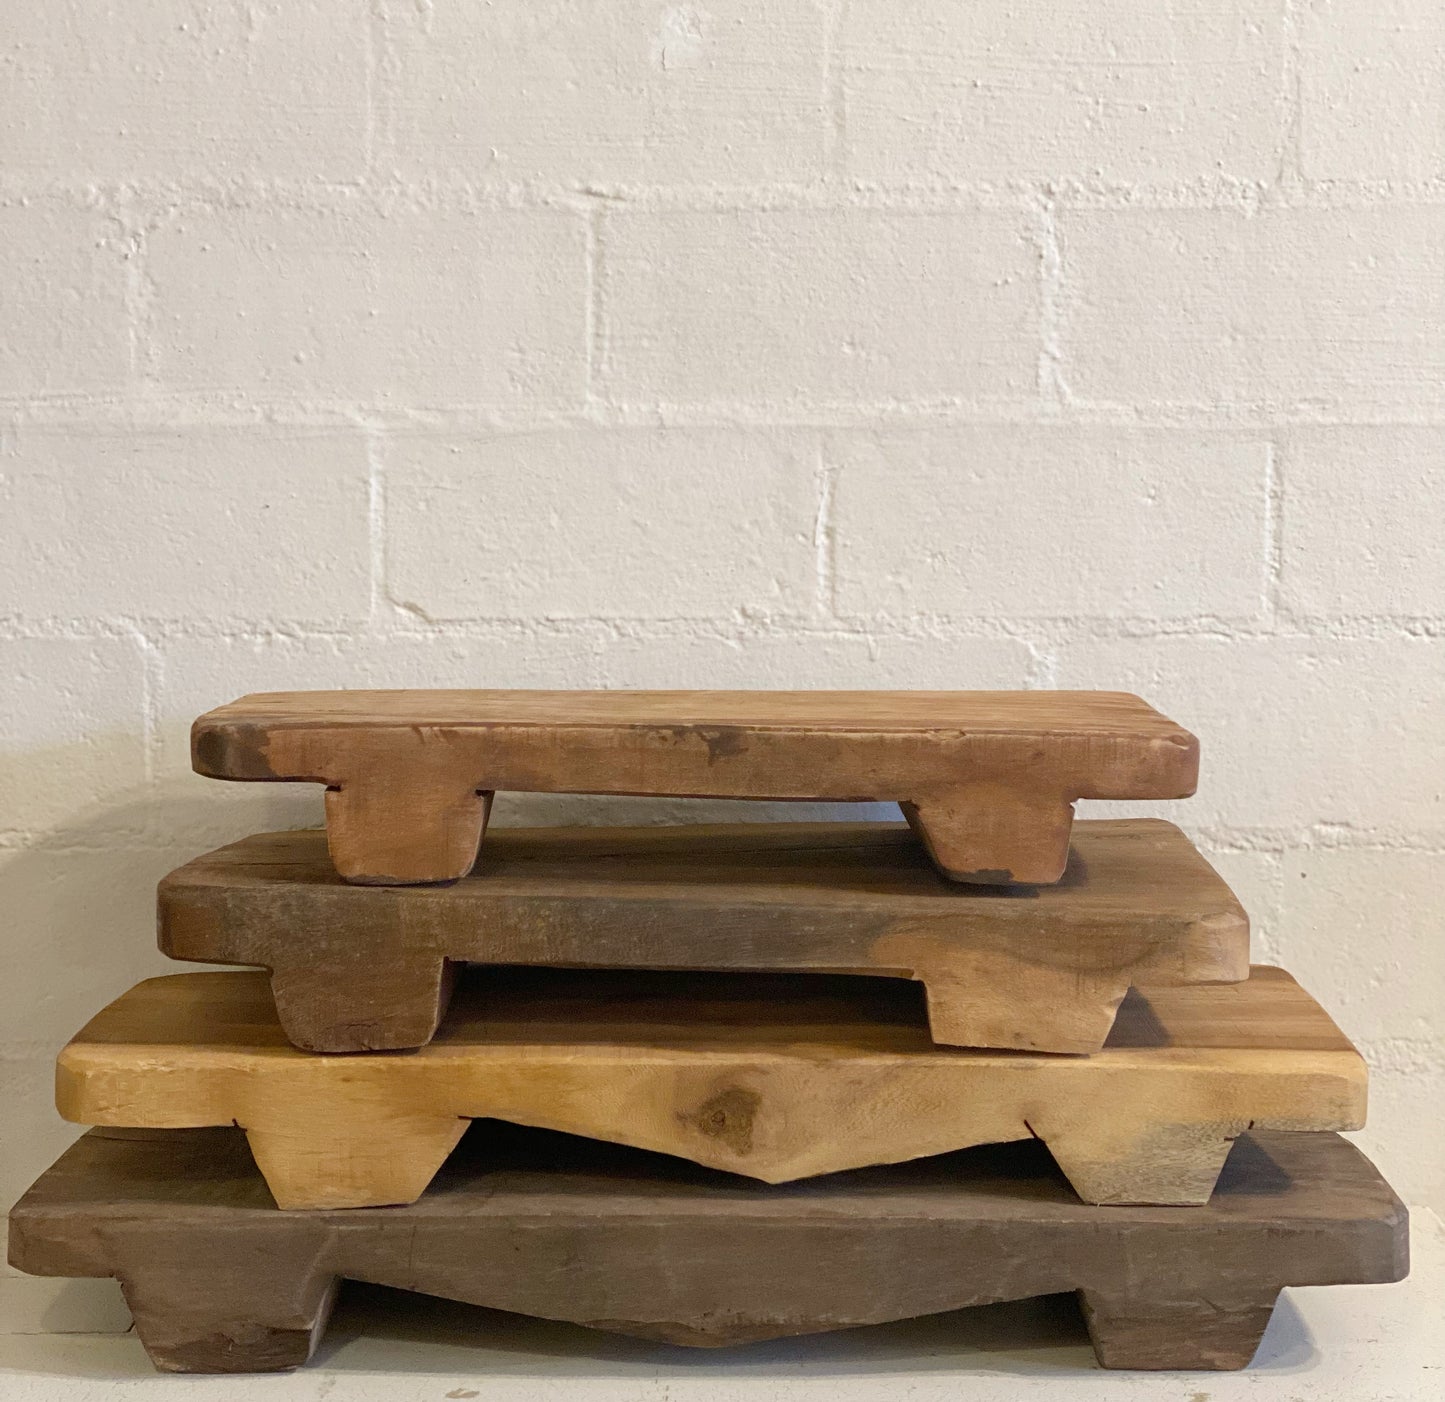 Wood Pedestal Board- as found, each vary